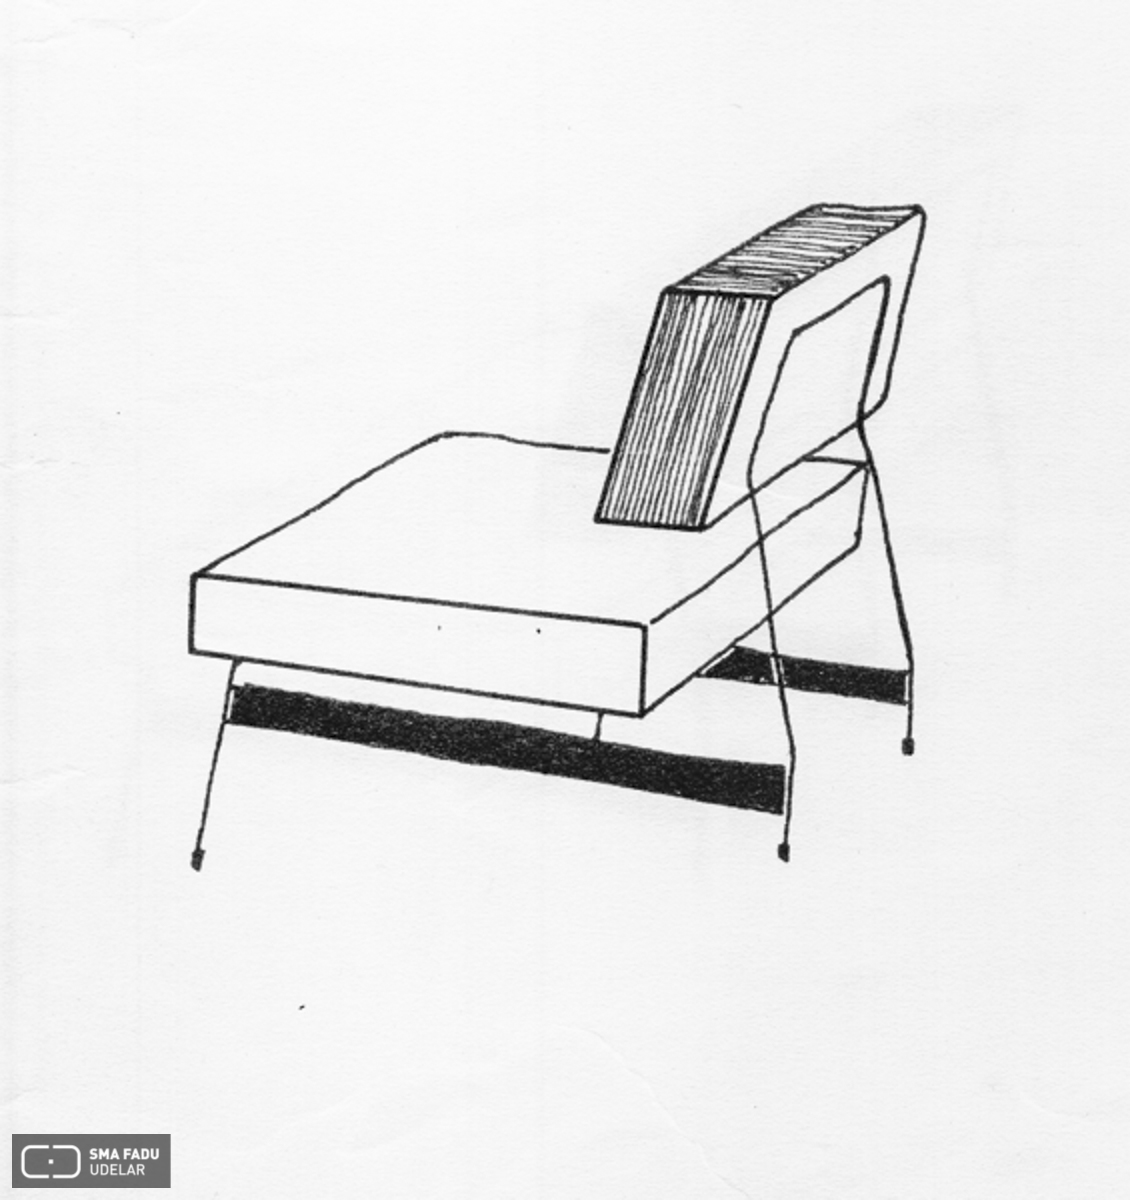 Diseño de sillón para edificio Varig. Croquis de Fresnedo Siri, R.